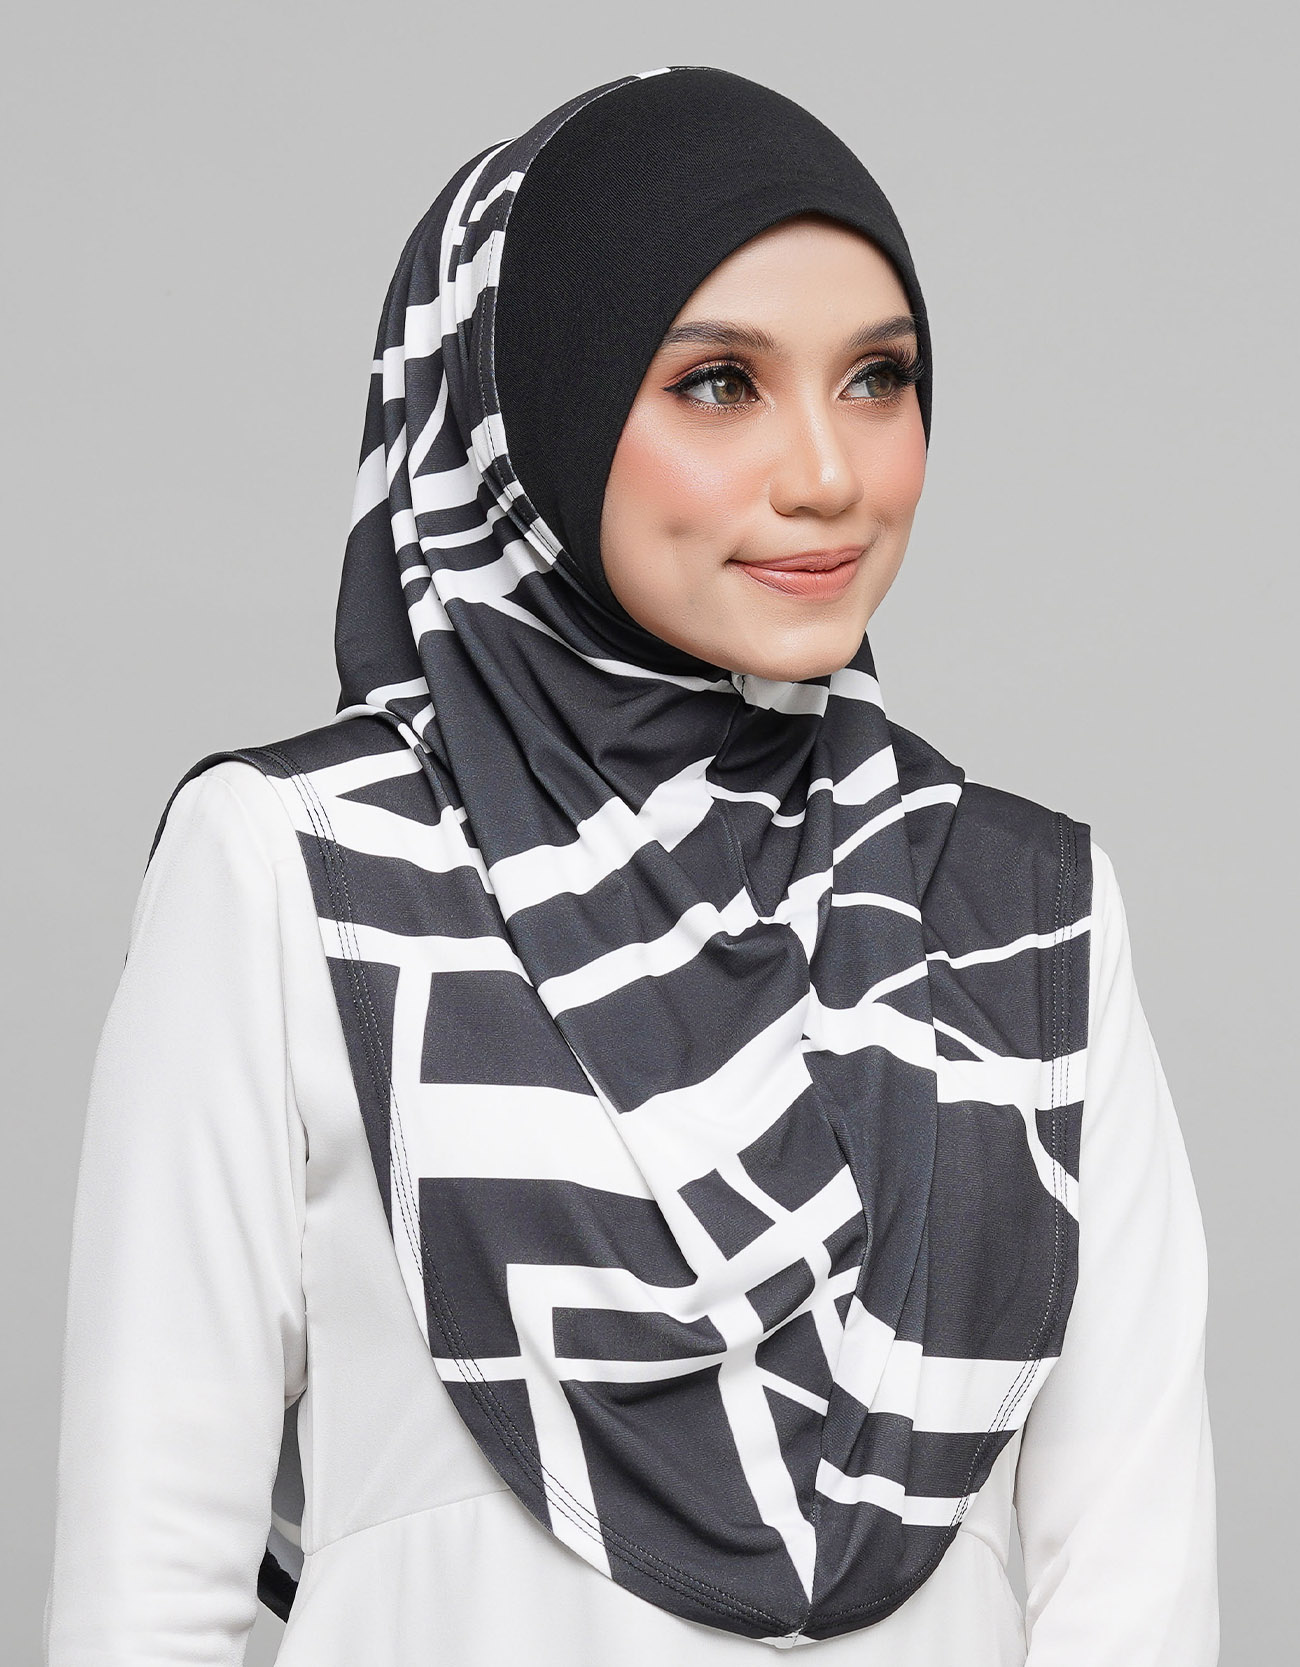 Express Hijab Damia Signature 06 - Black Edition